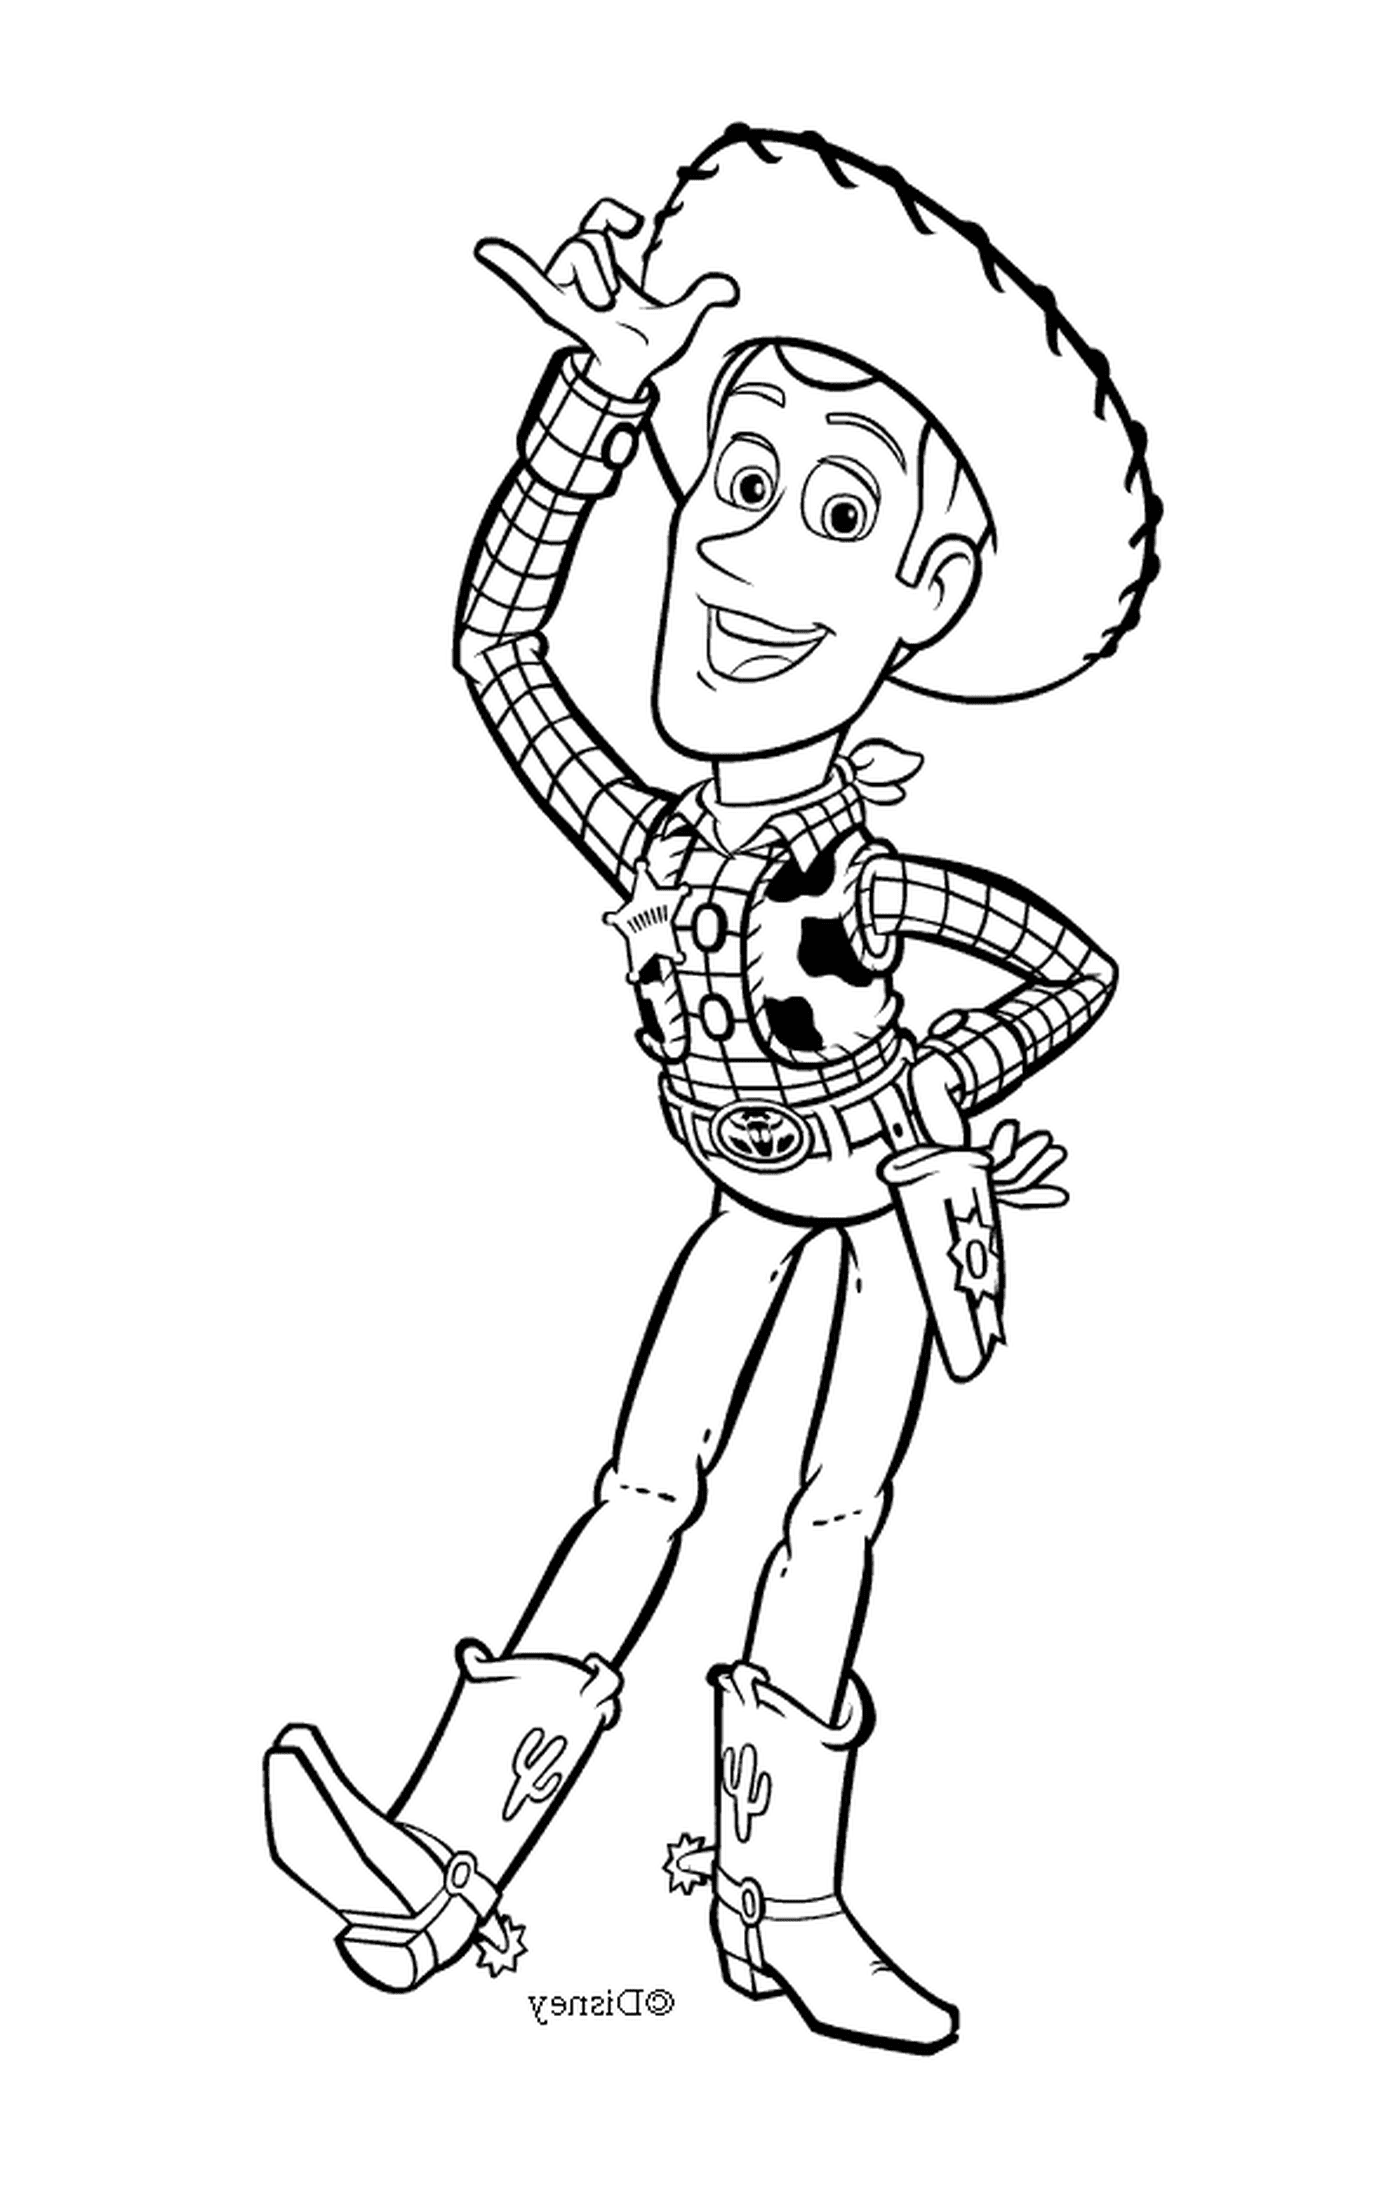  Woody, the intrepid sherif 